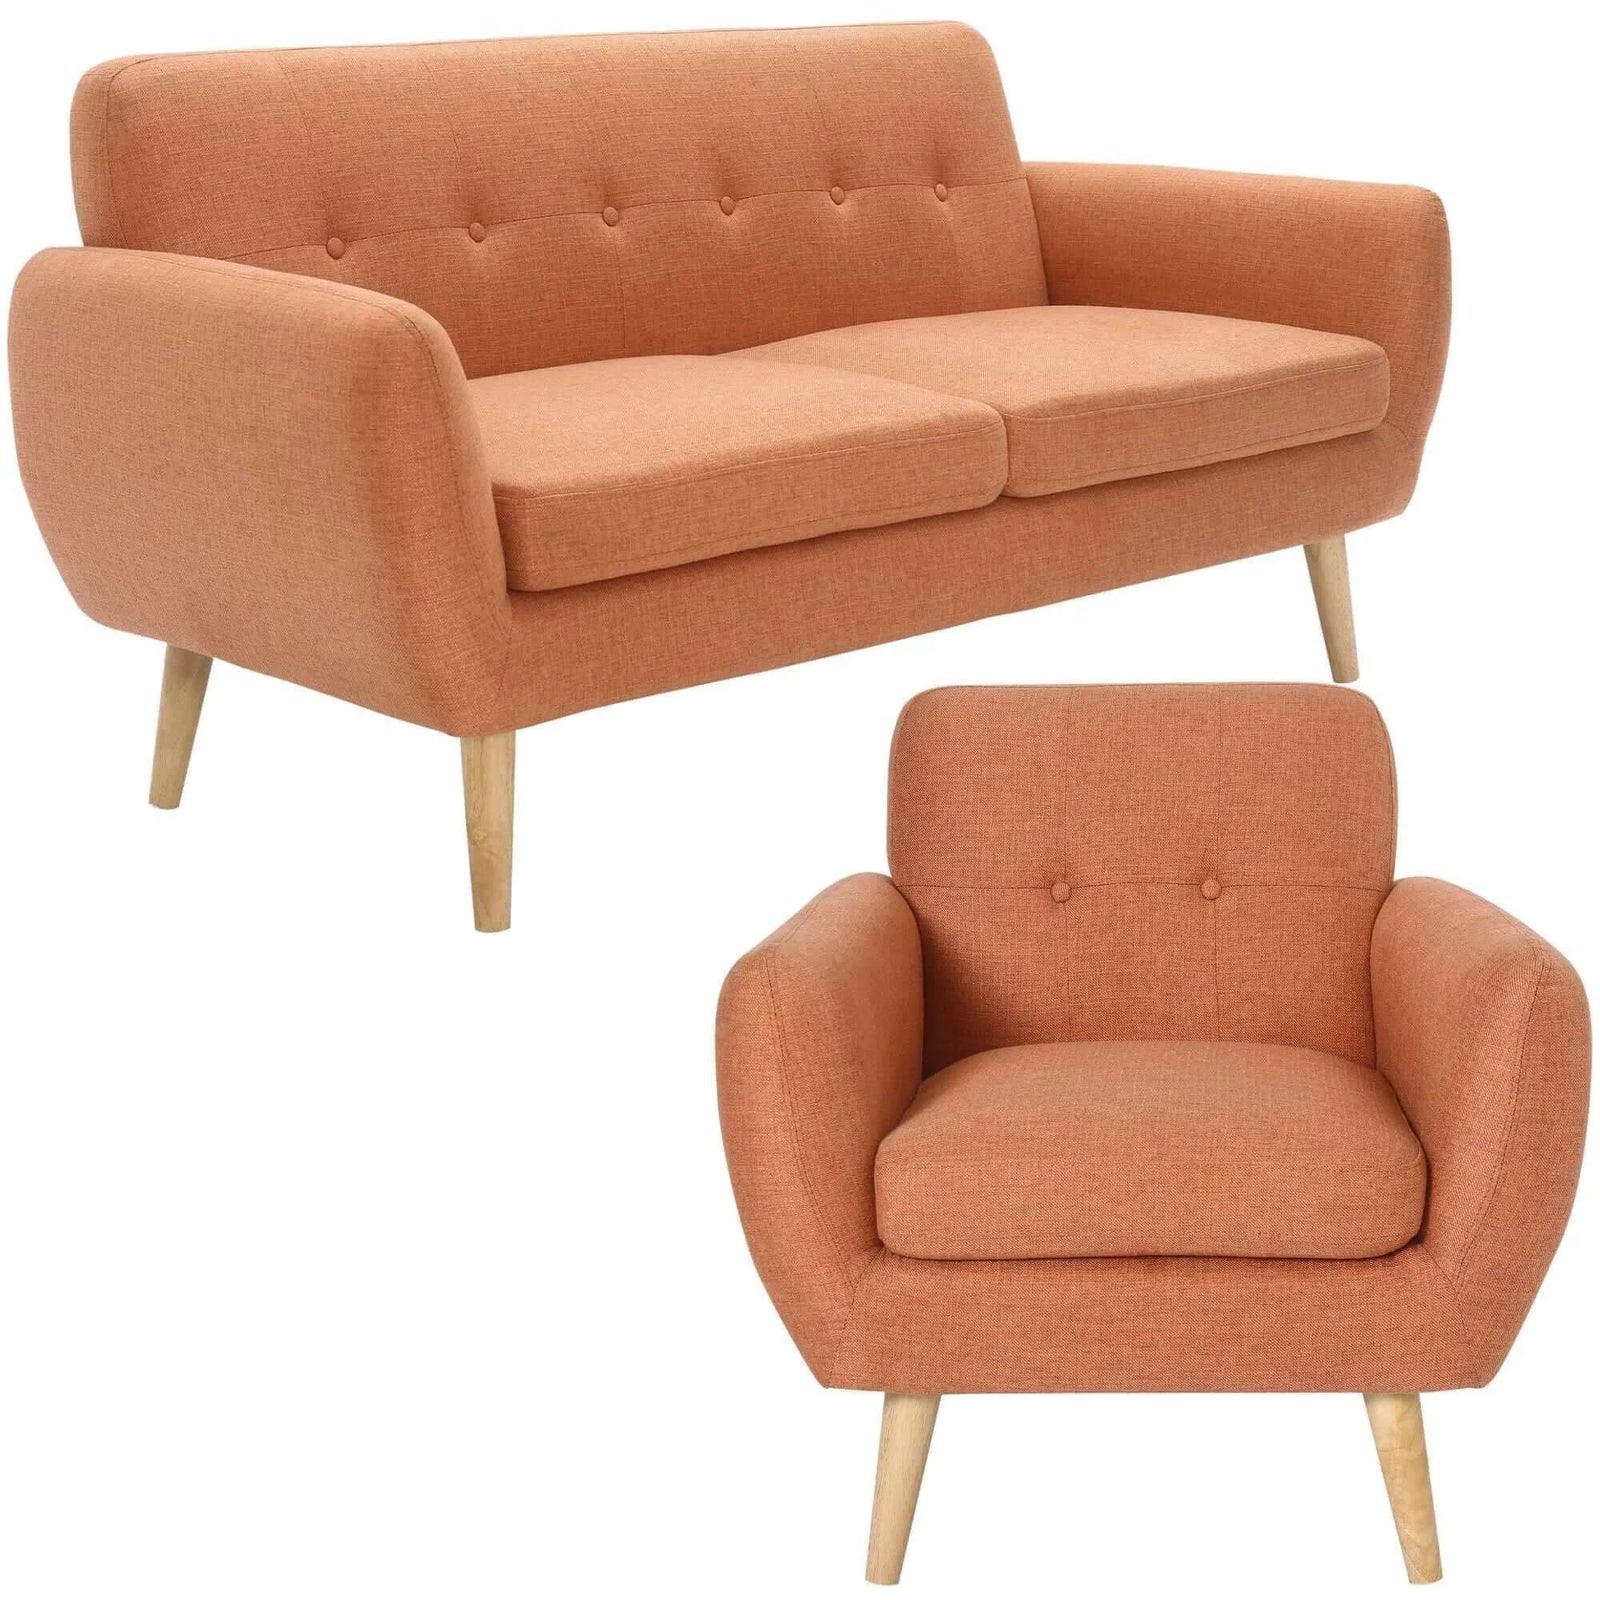 Buy dane 3 + 1 seater fabric upholstered sofa armchair lounge couch - orange - upinteriors-Upinteriors